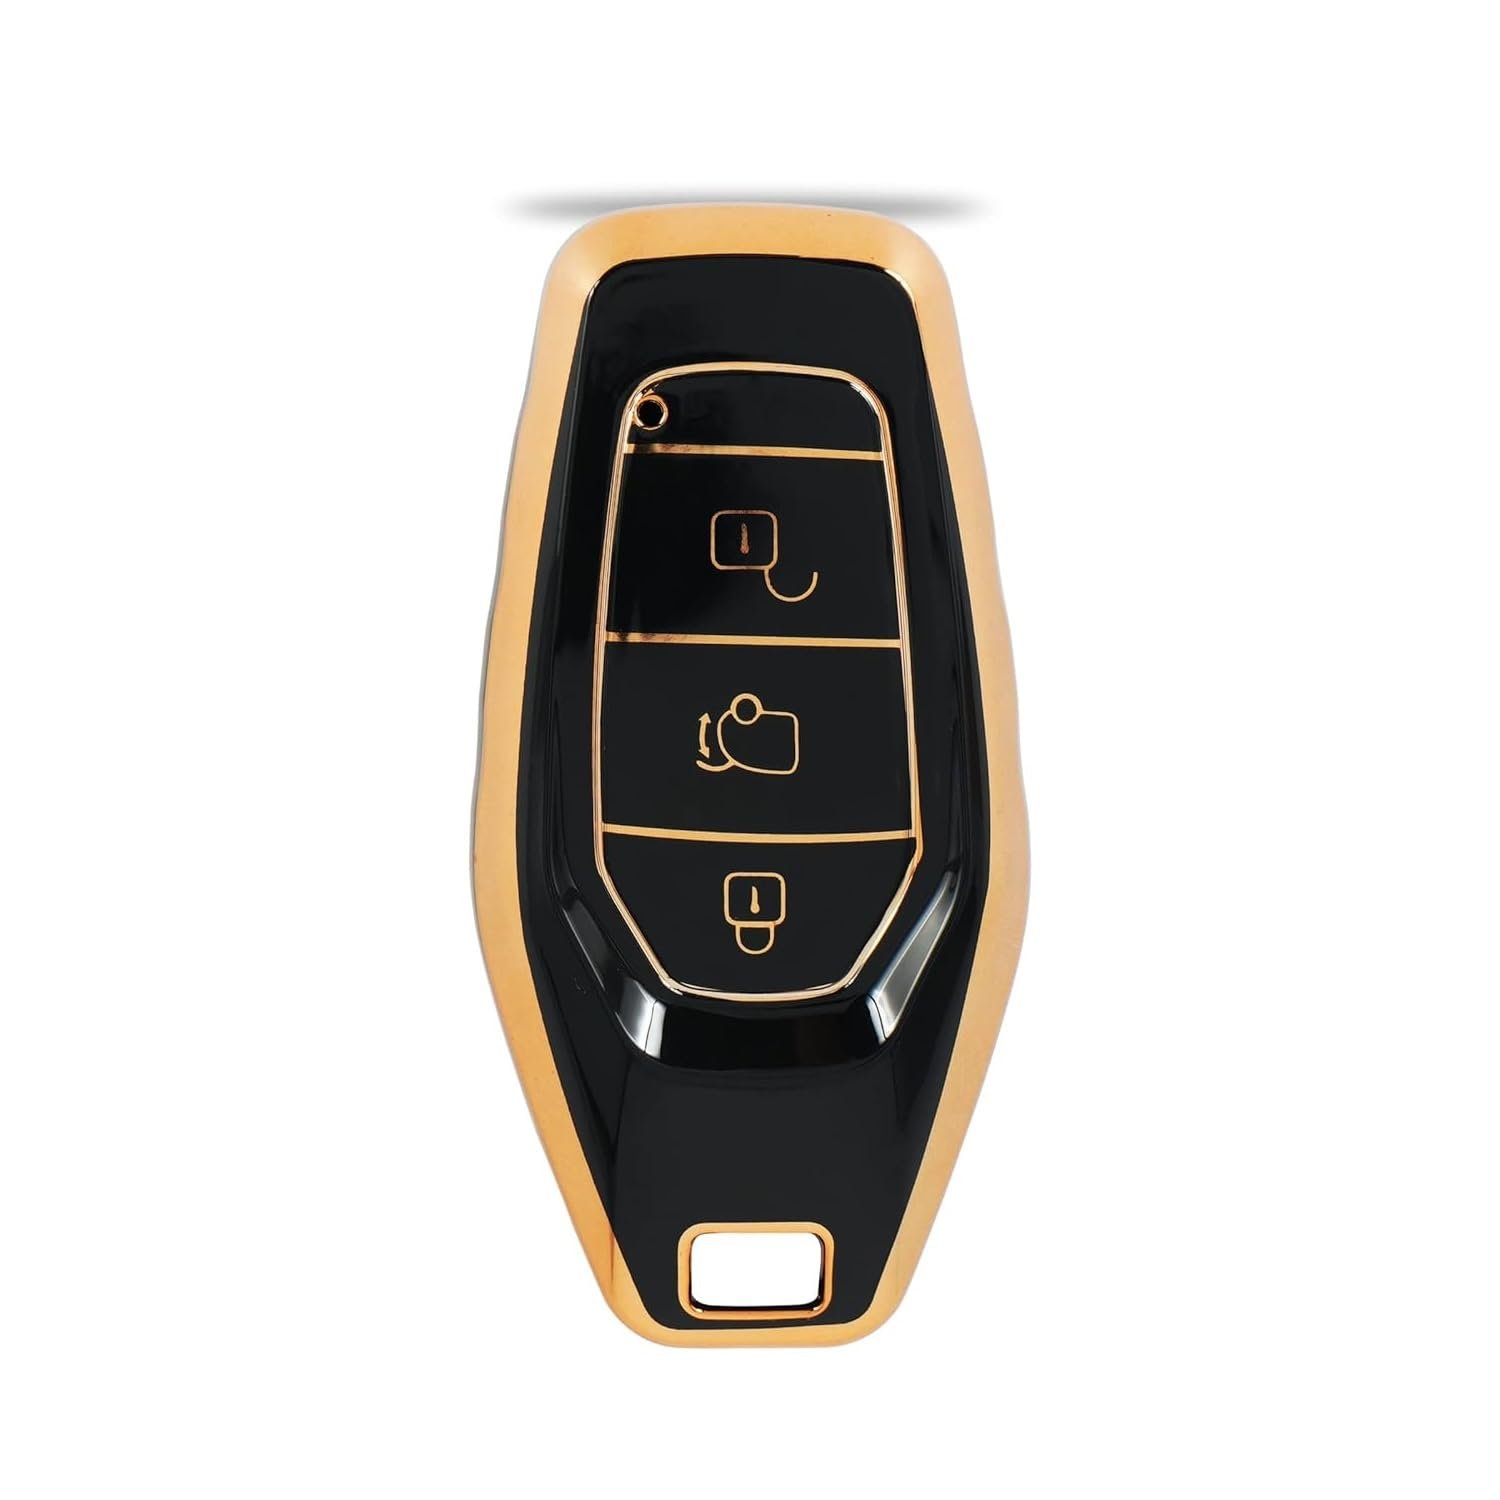 TPU Car Key Cover Compatible with Mahindra XUV-500 Smart Key (Black/Gold) Image 